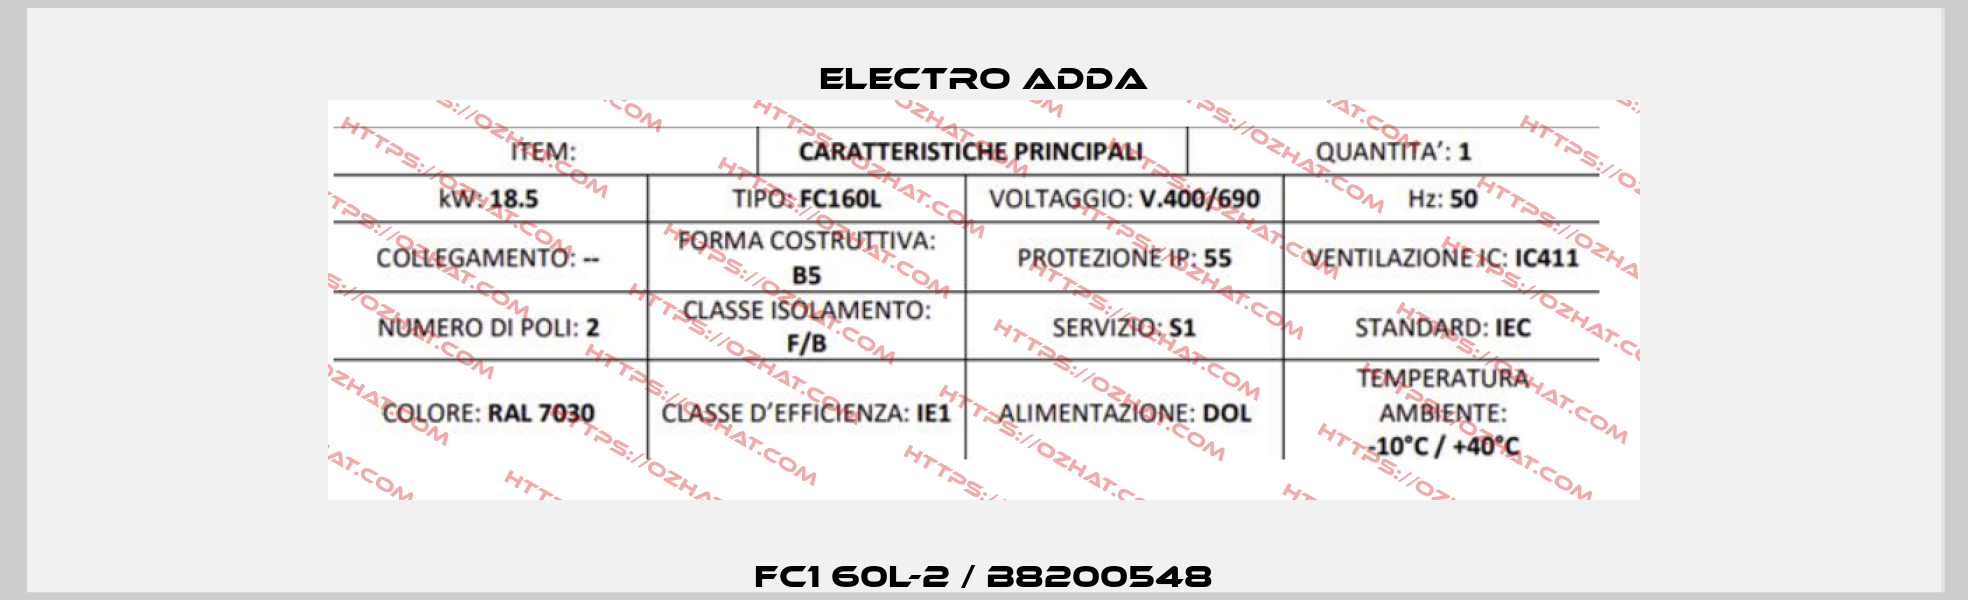 FC1 60L-2 / B8200548 Electro Adda